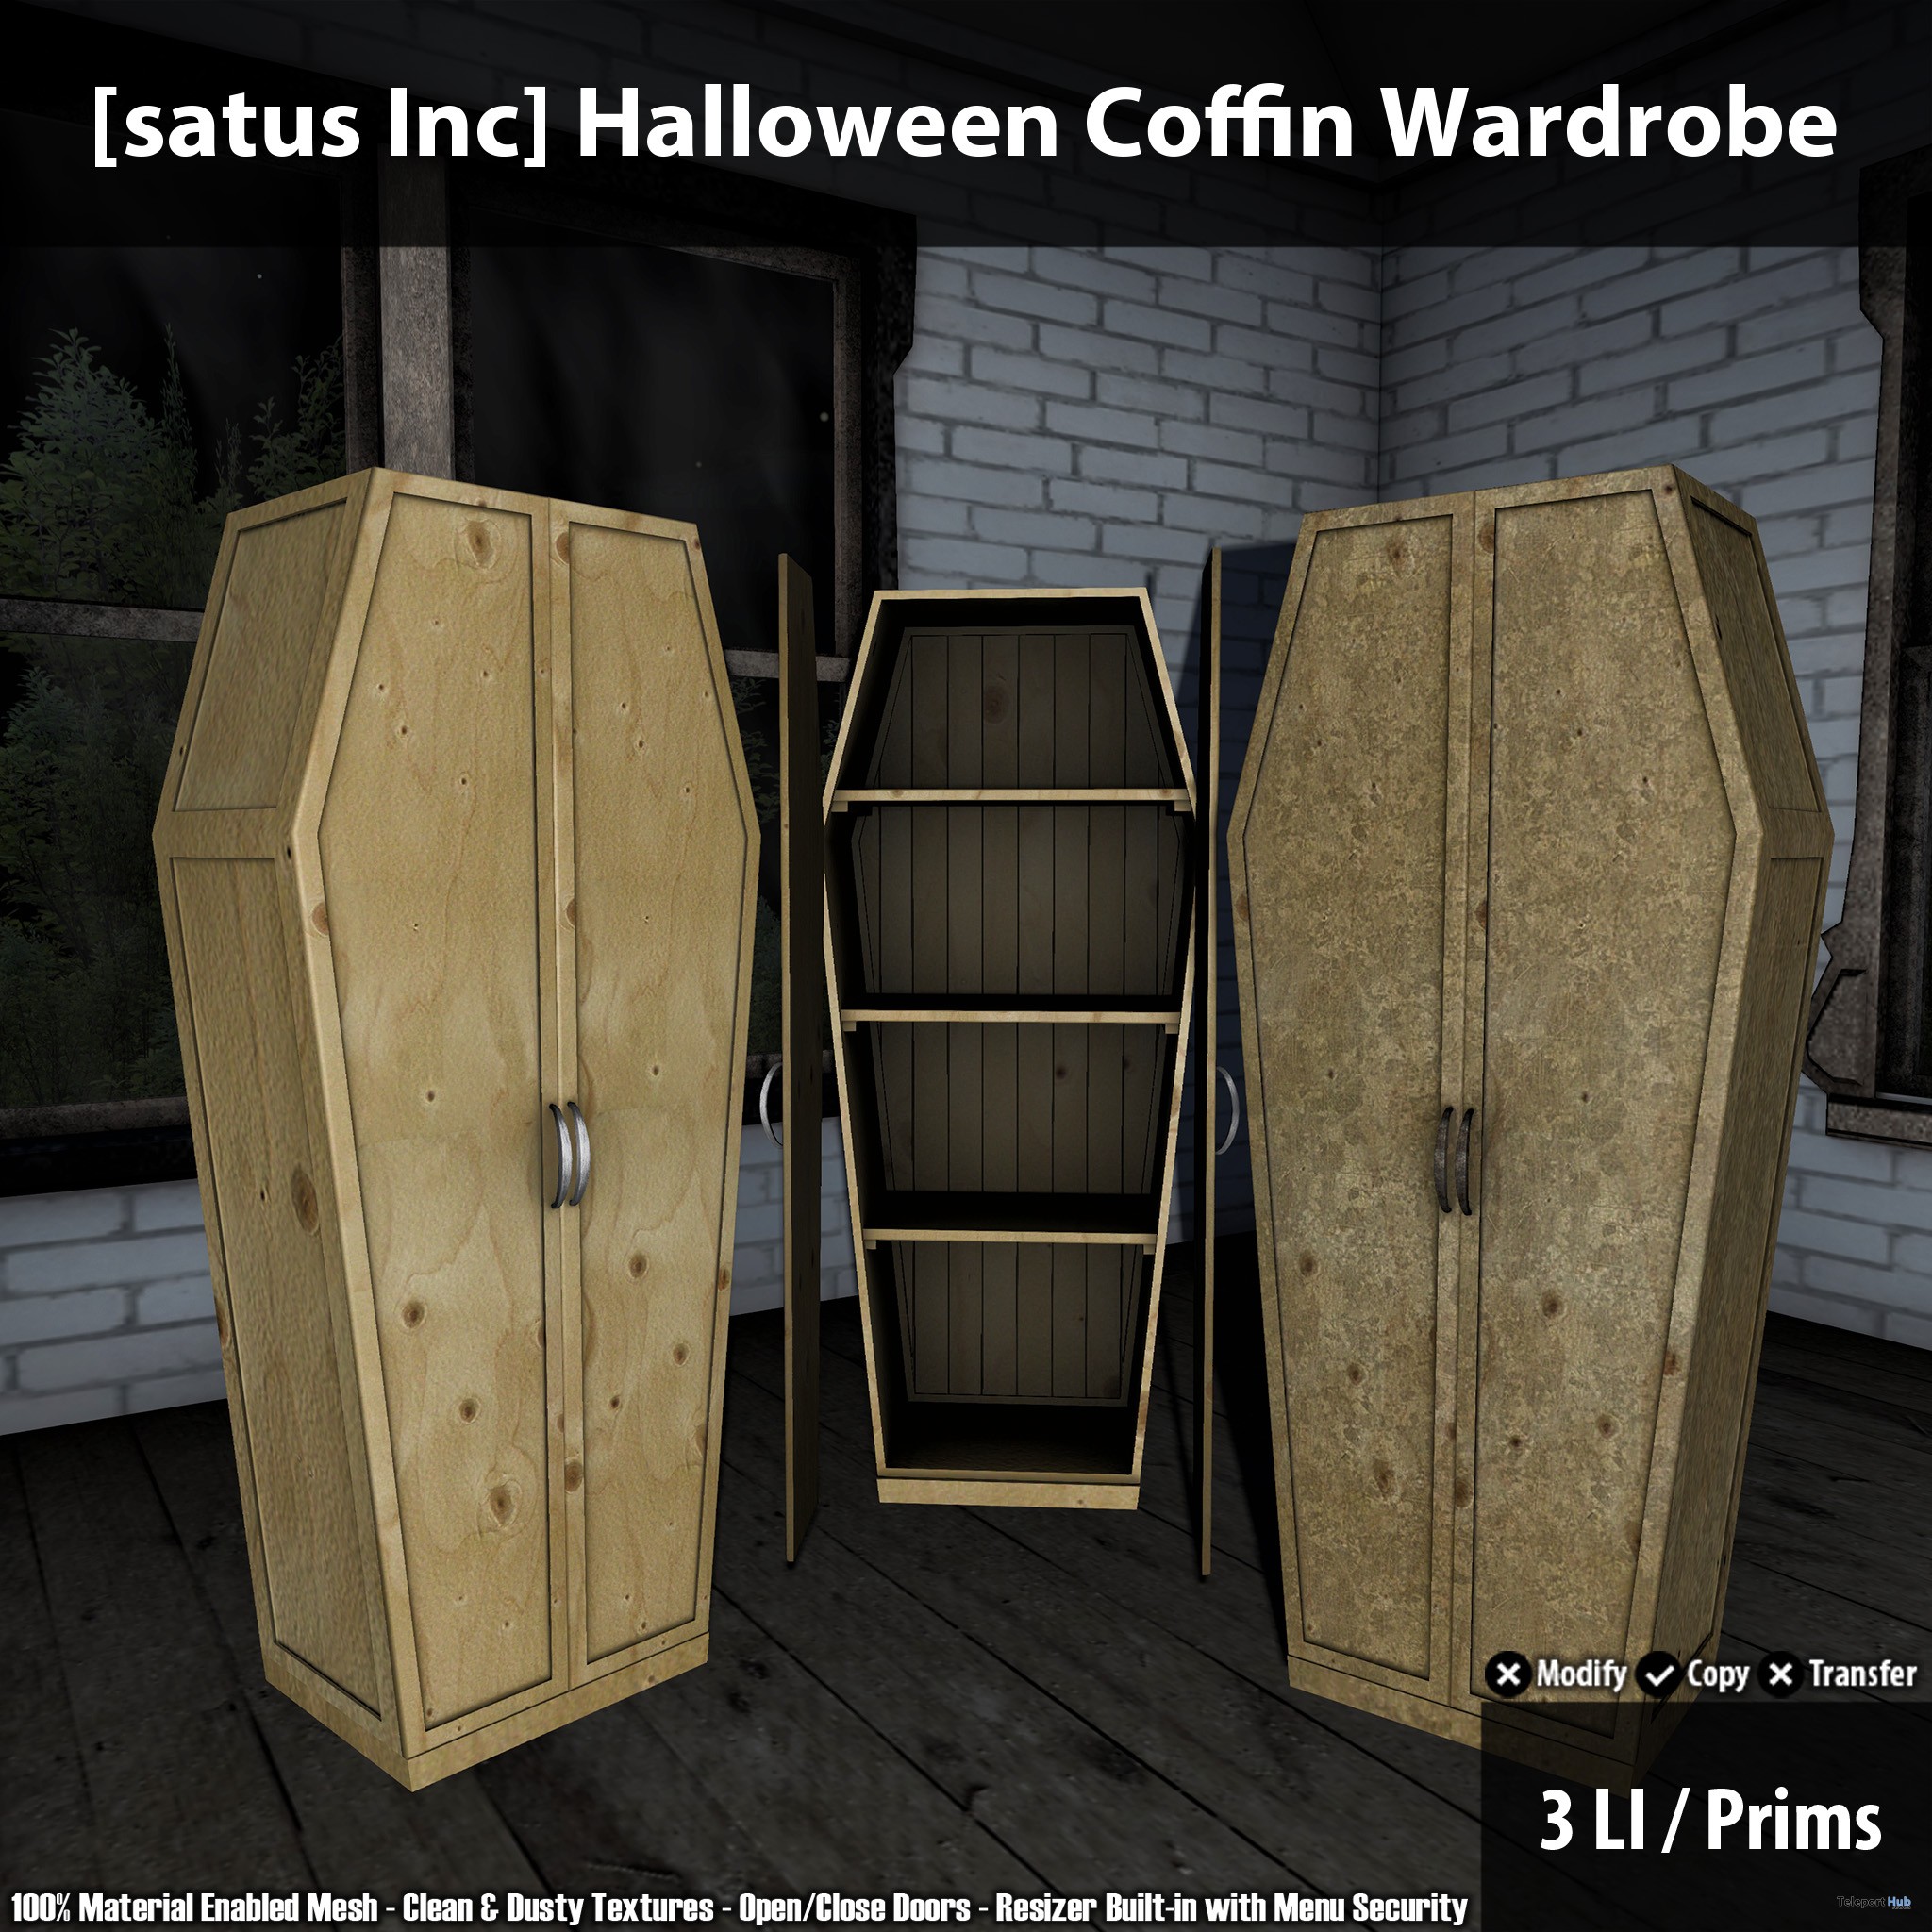 New Release: Halloween Coffin Wardrobe by [satus Inc] - Teleport Hub - teleporthub.com